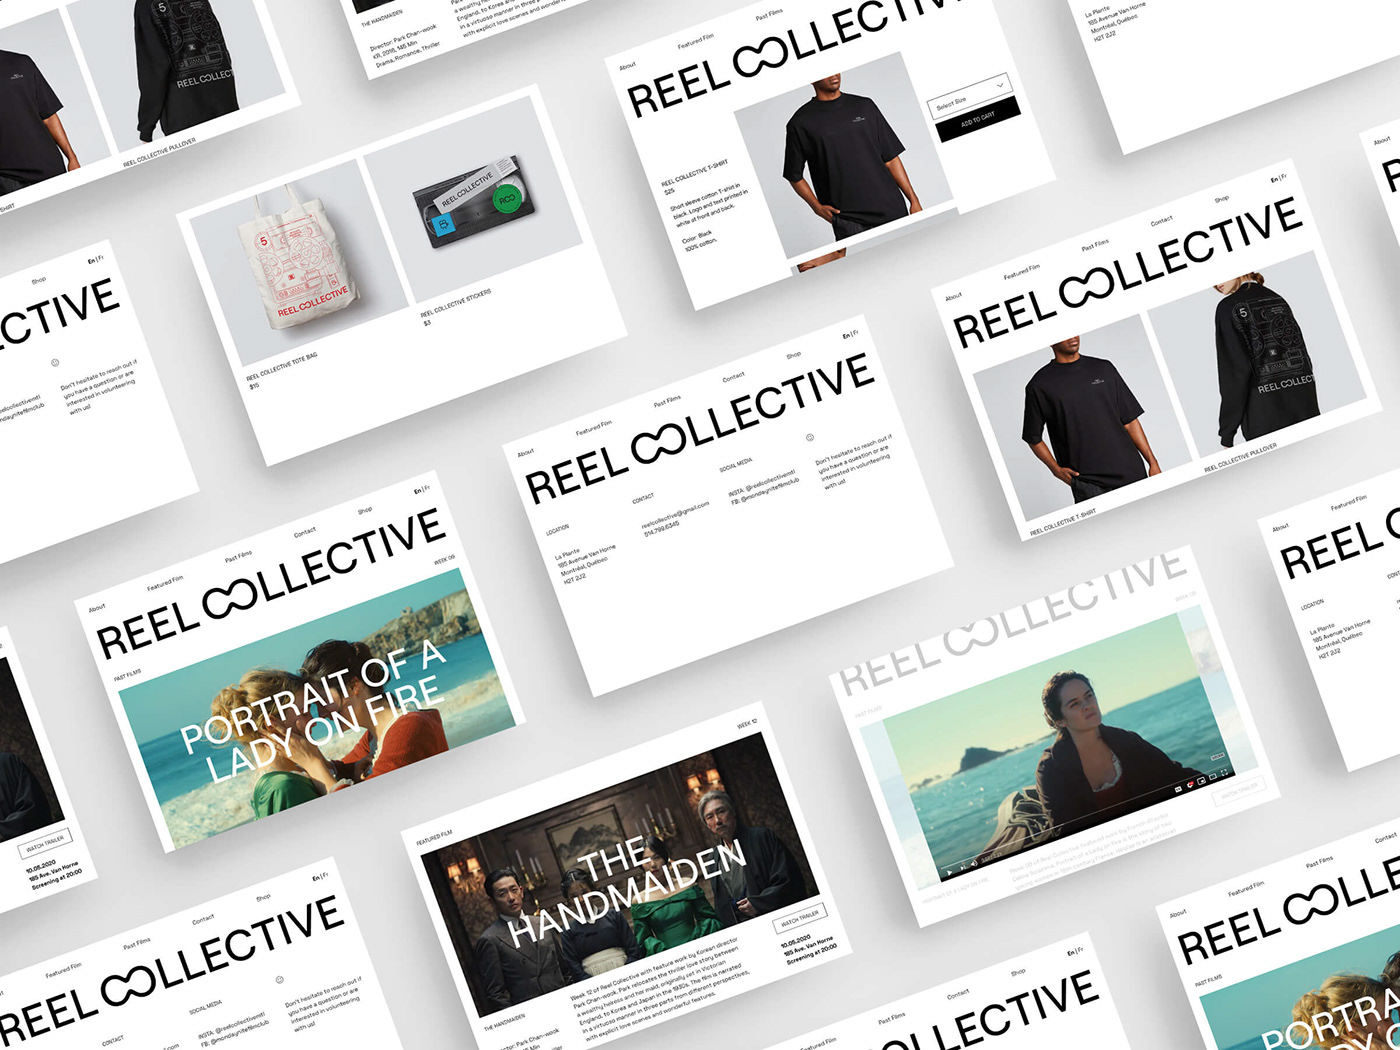 Reel Collective web designs in desktop view.